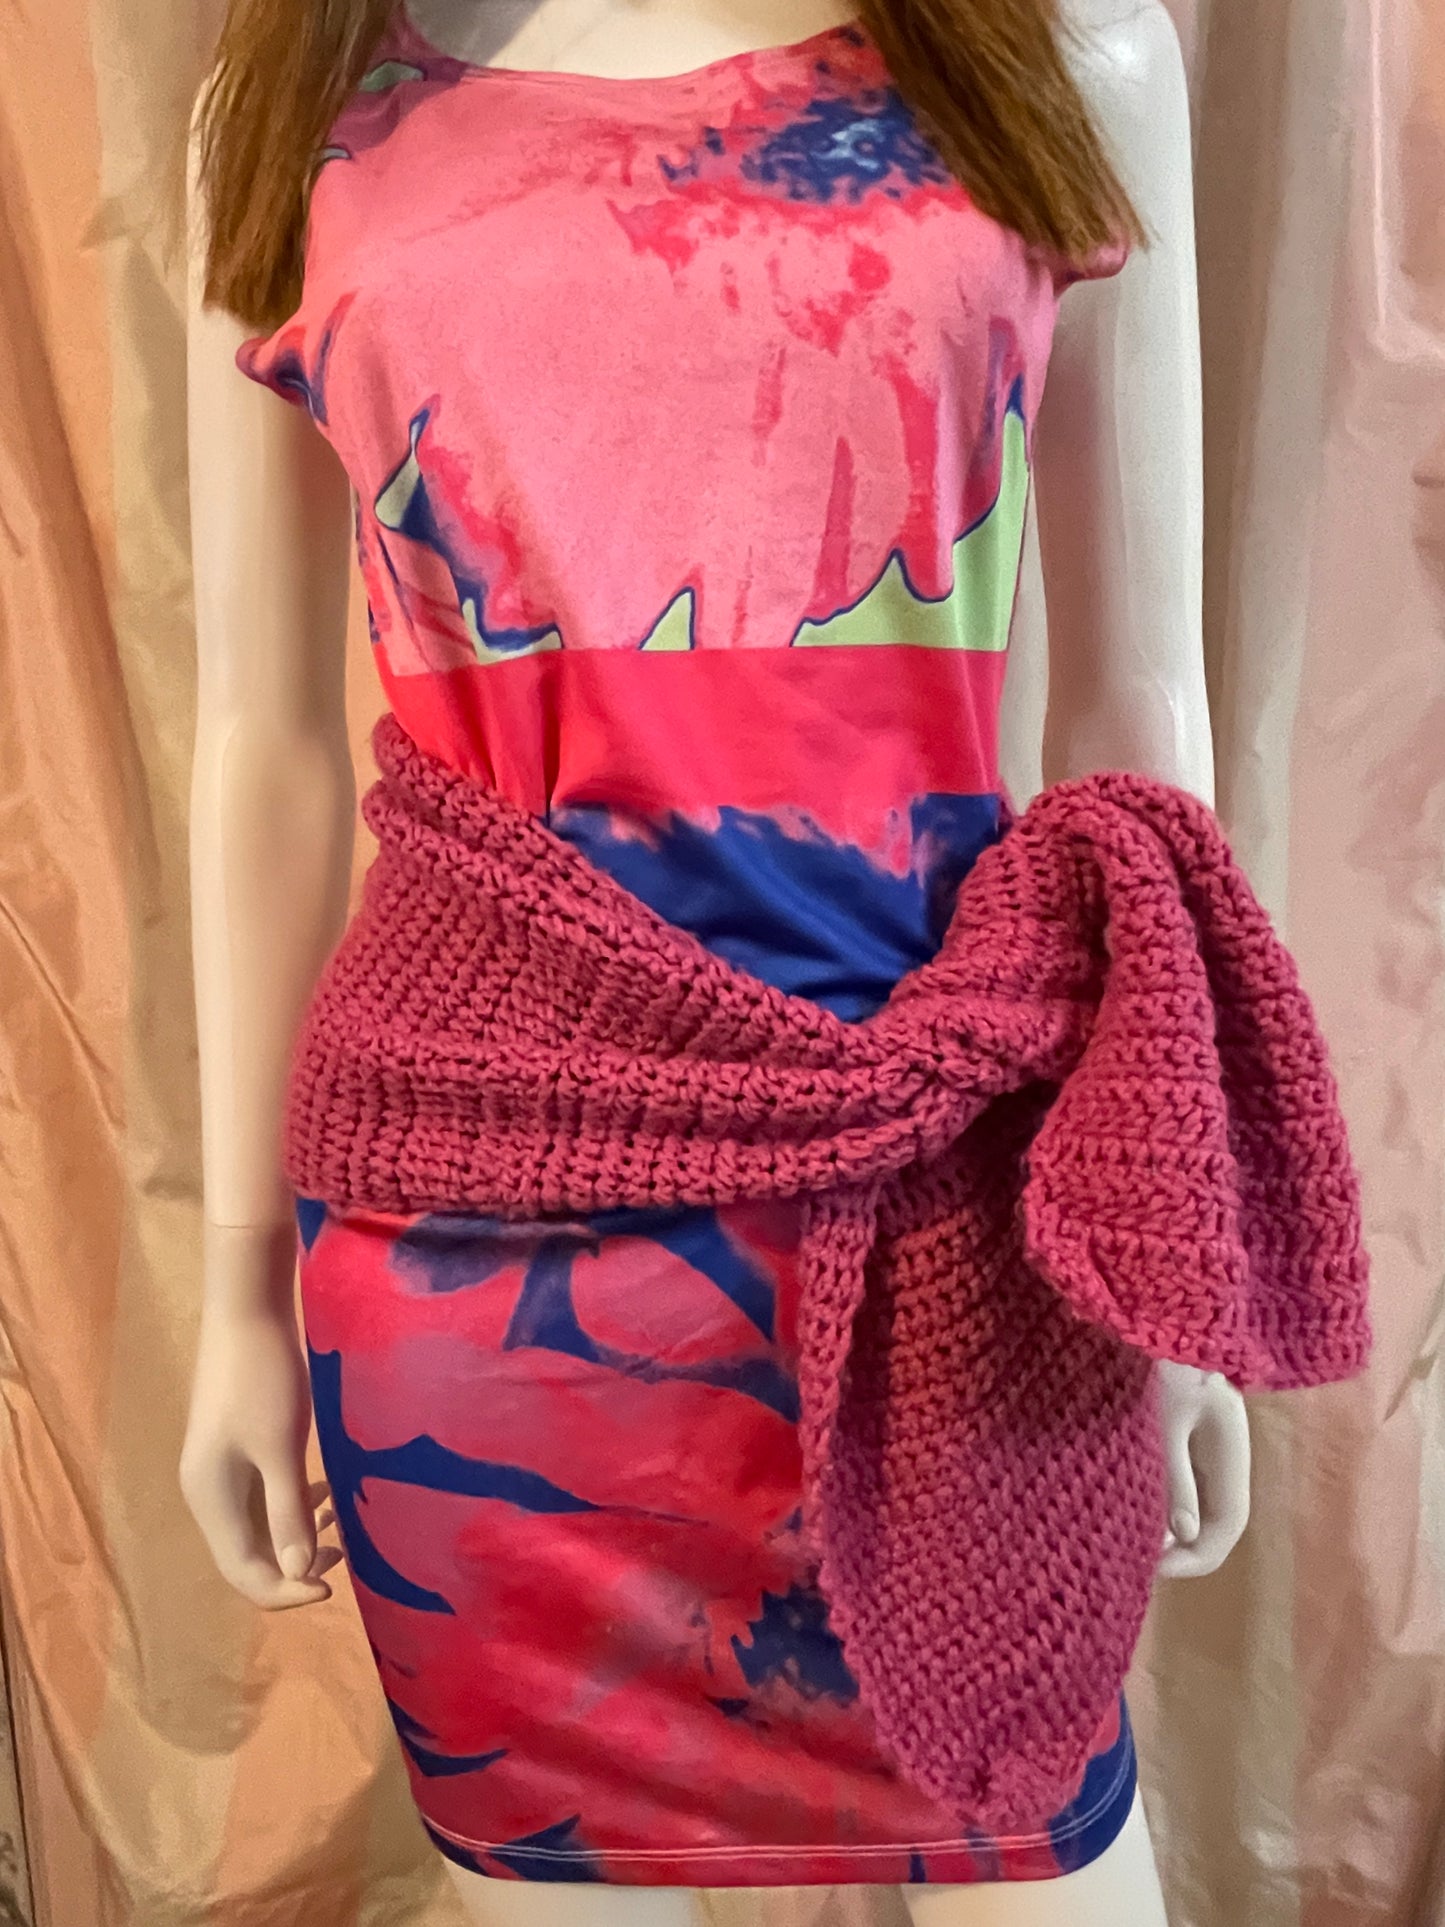 Original SL stretch dress with hand knit pink scarf